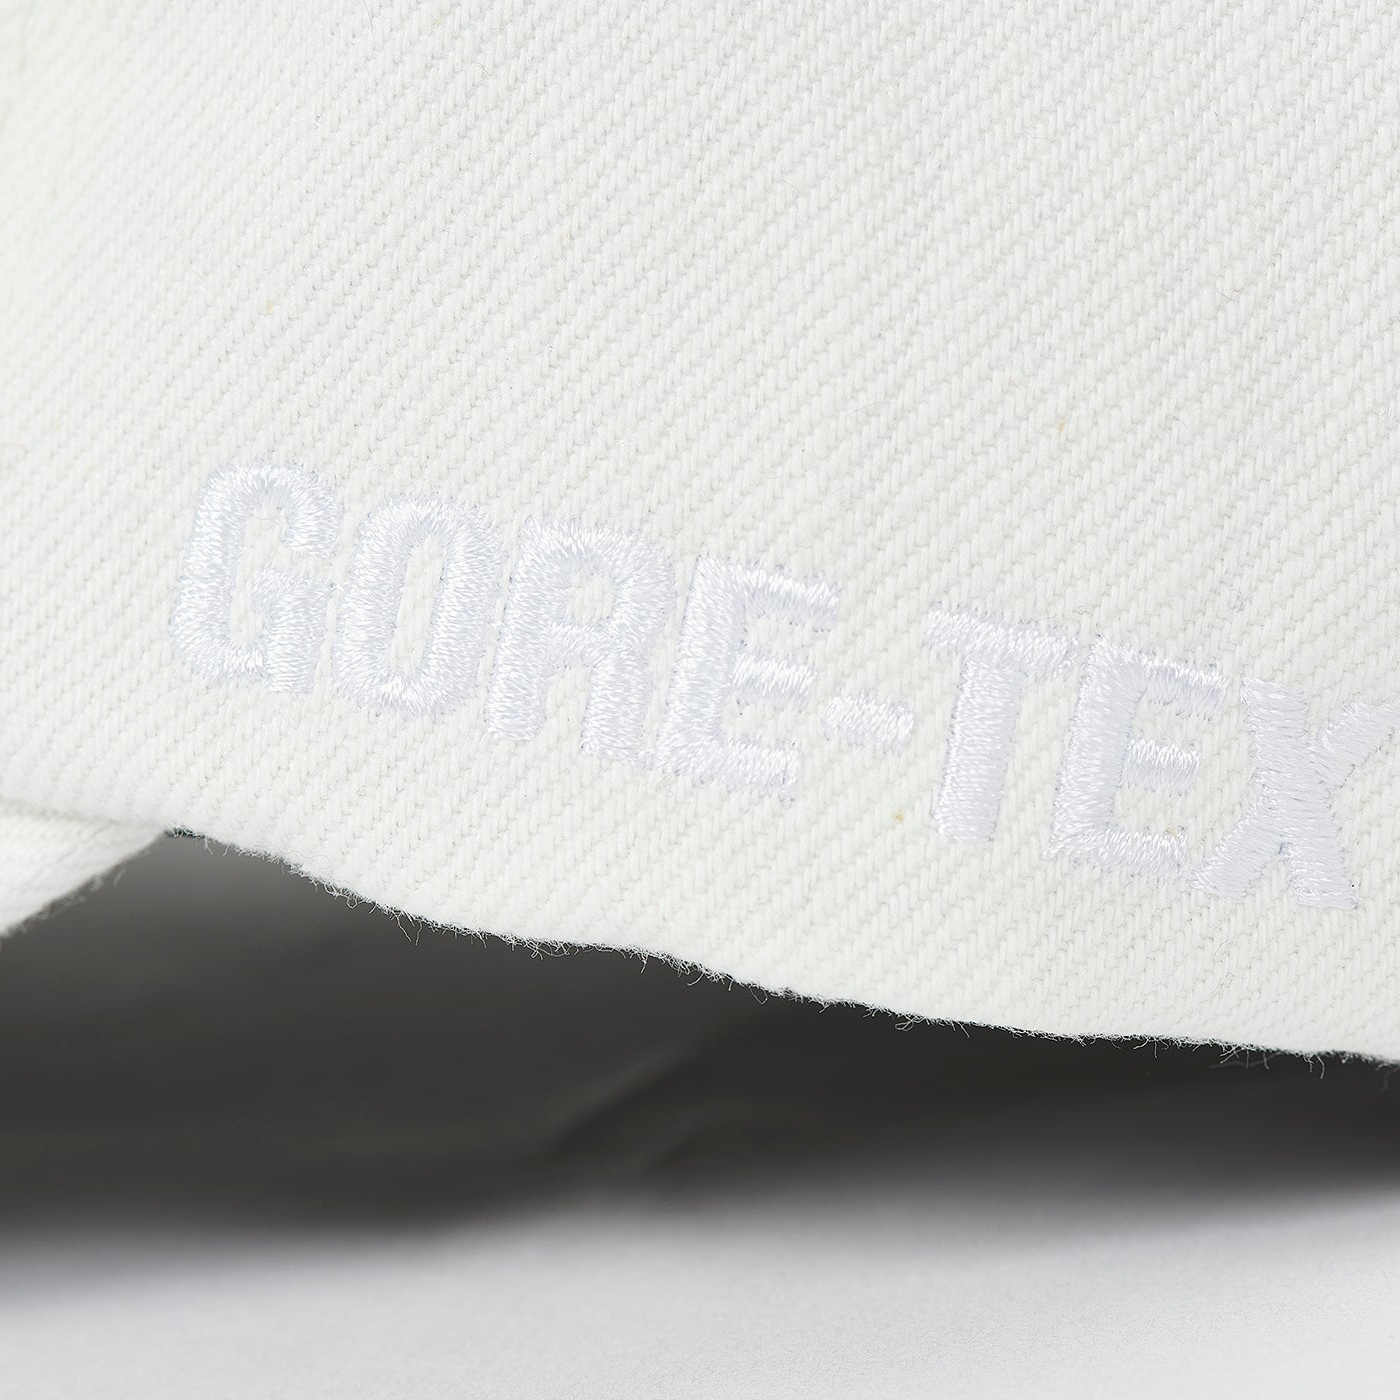 Thumbnail GORE-TEX P 6-PANEL WHITE one color